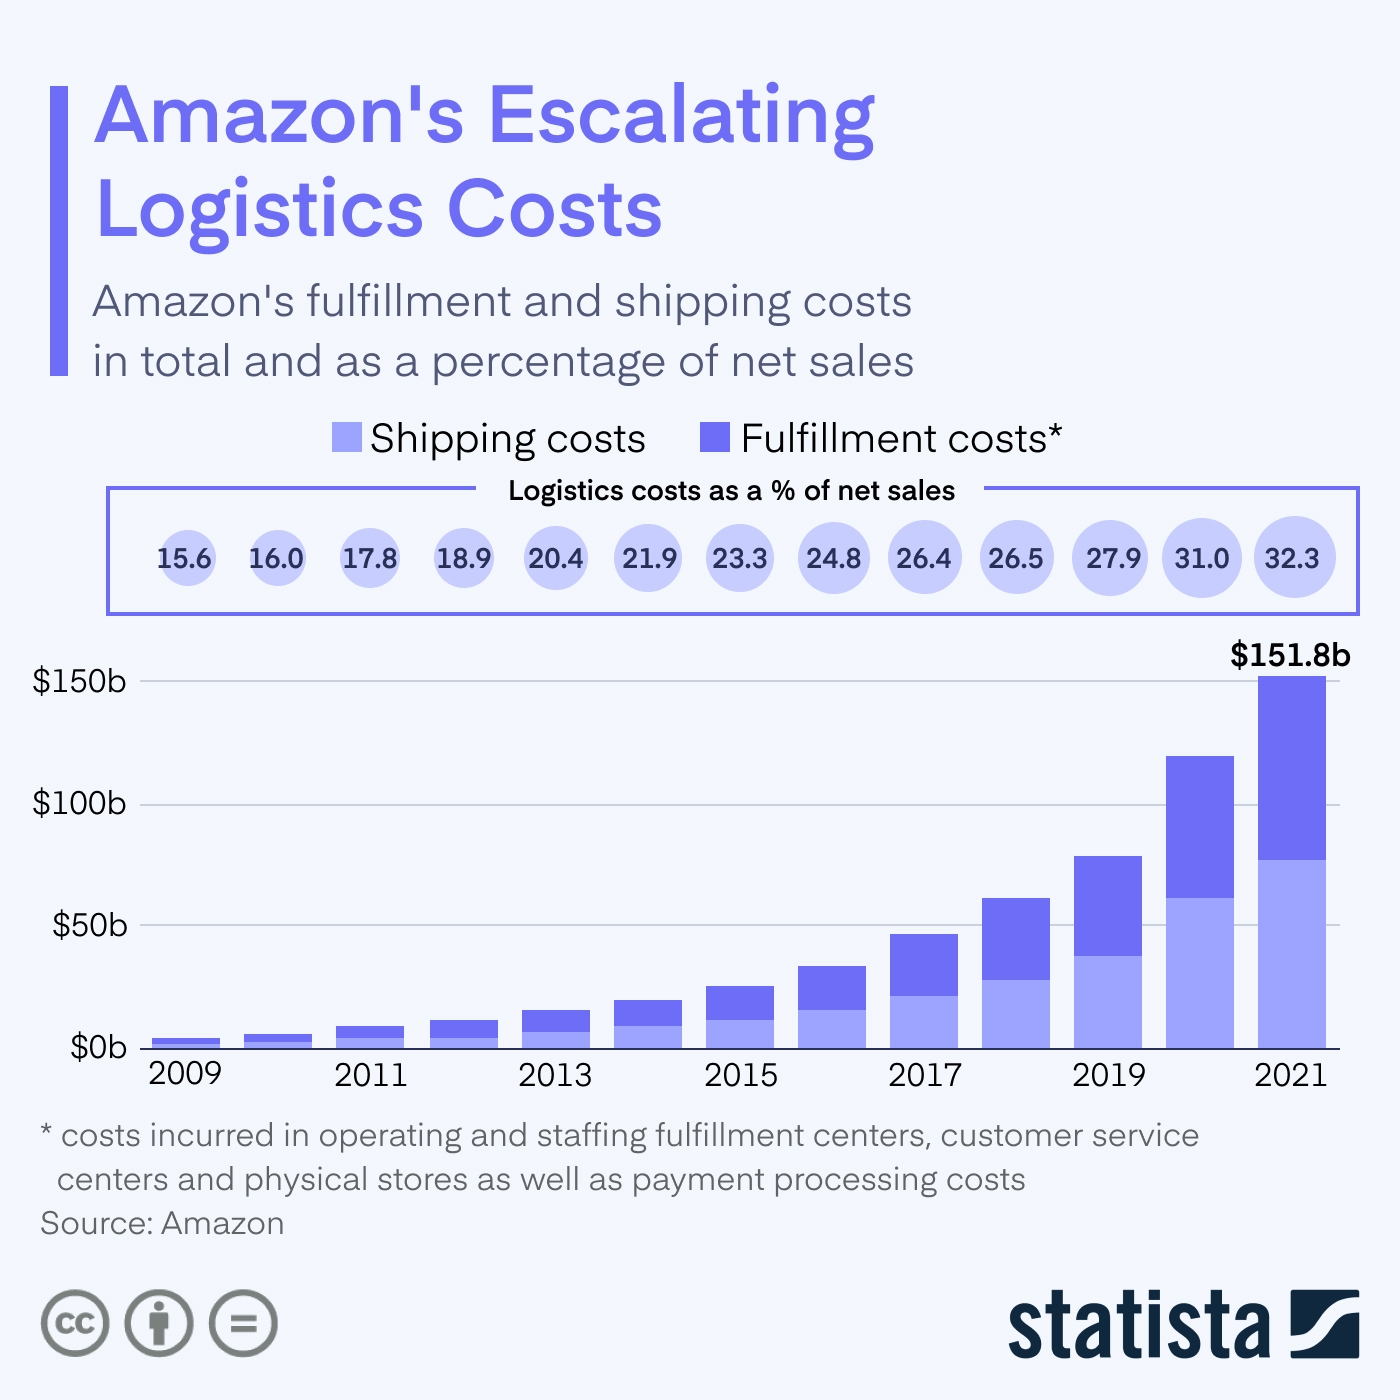 Amazon's Escalating Logistics Costs